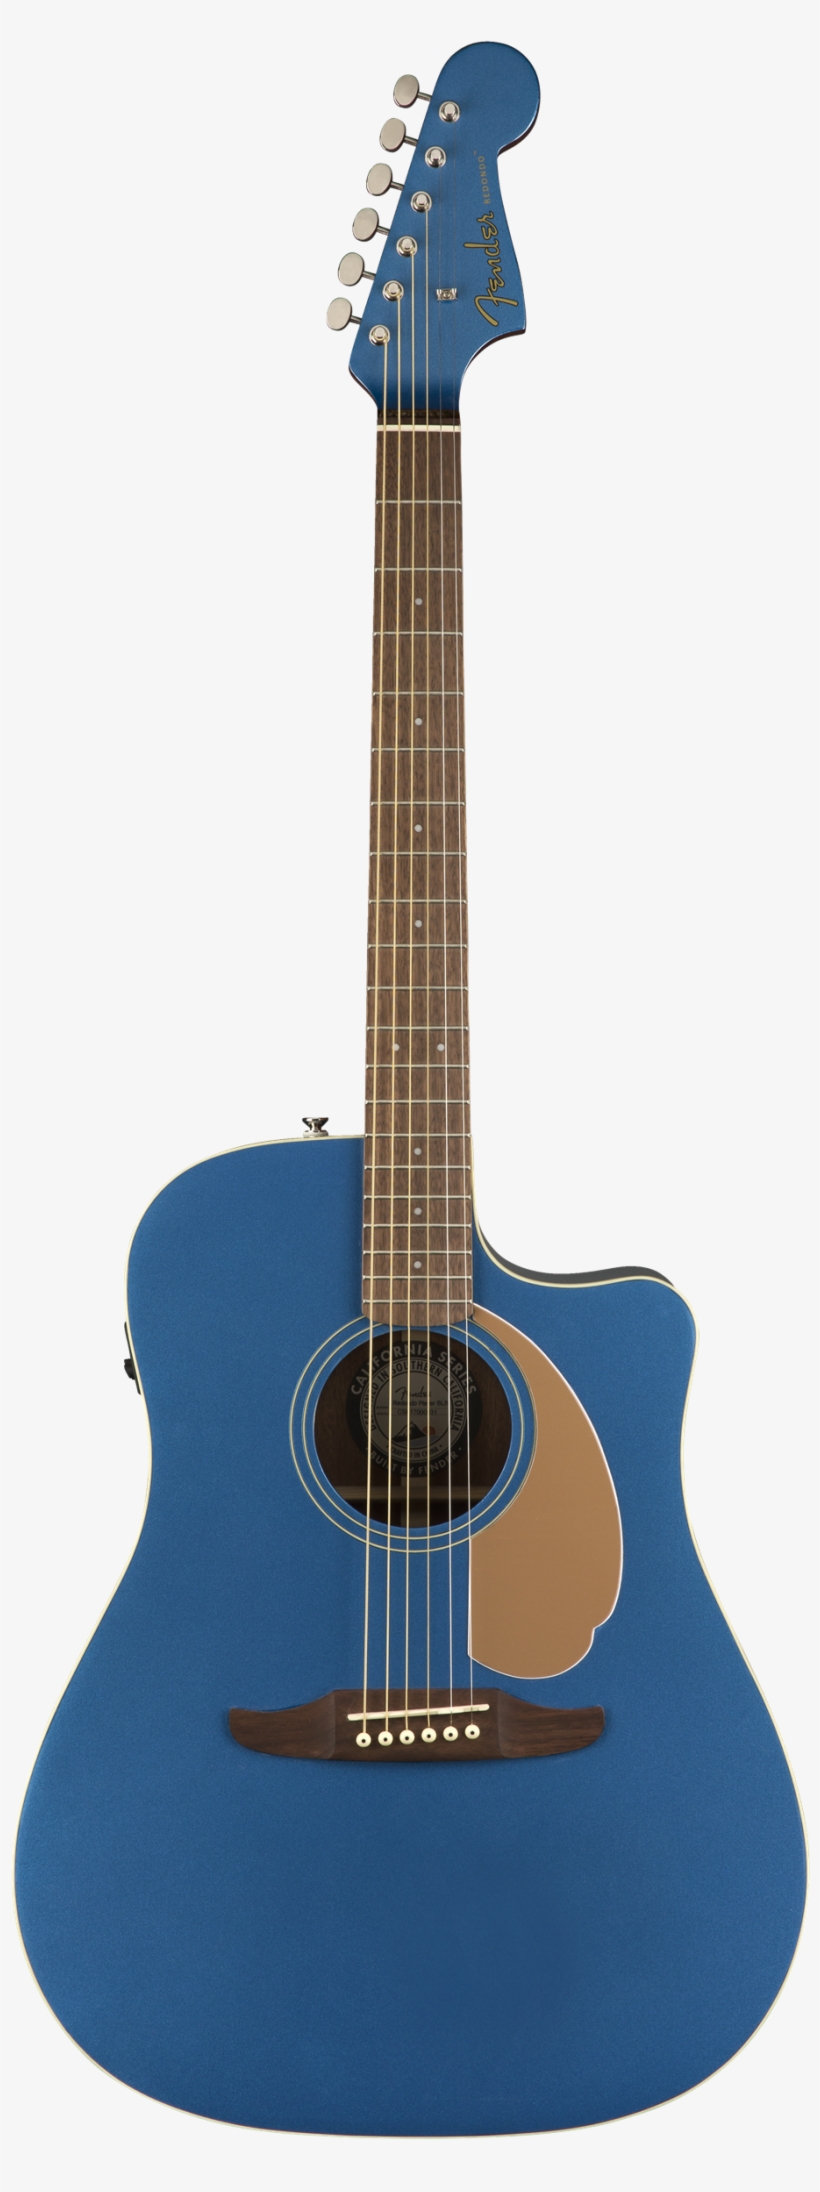 Fender Redondo Player Walnut Blb 01 - Fender Redondo Player Belmont Blue, transparent png #9257143